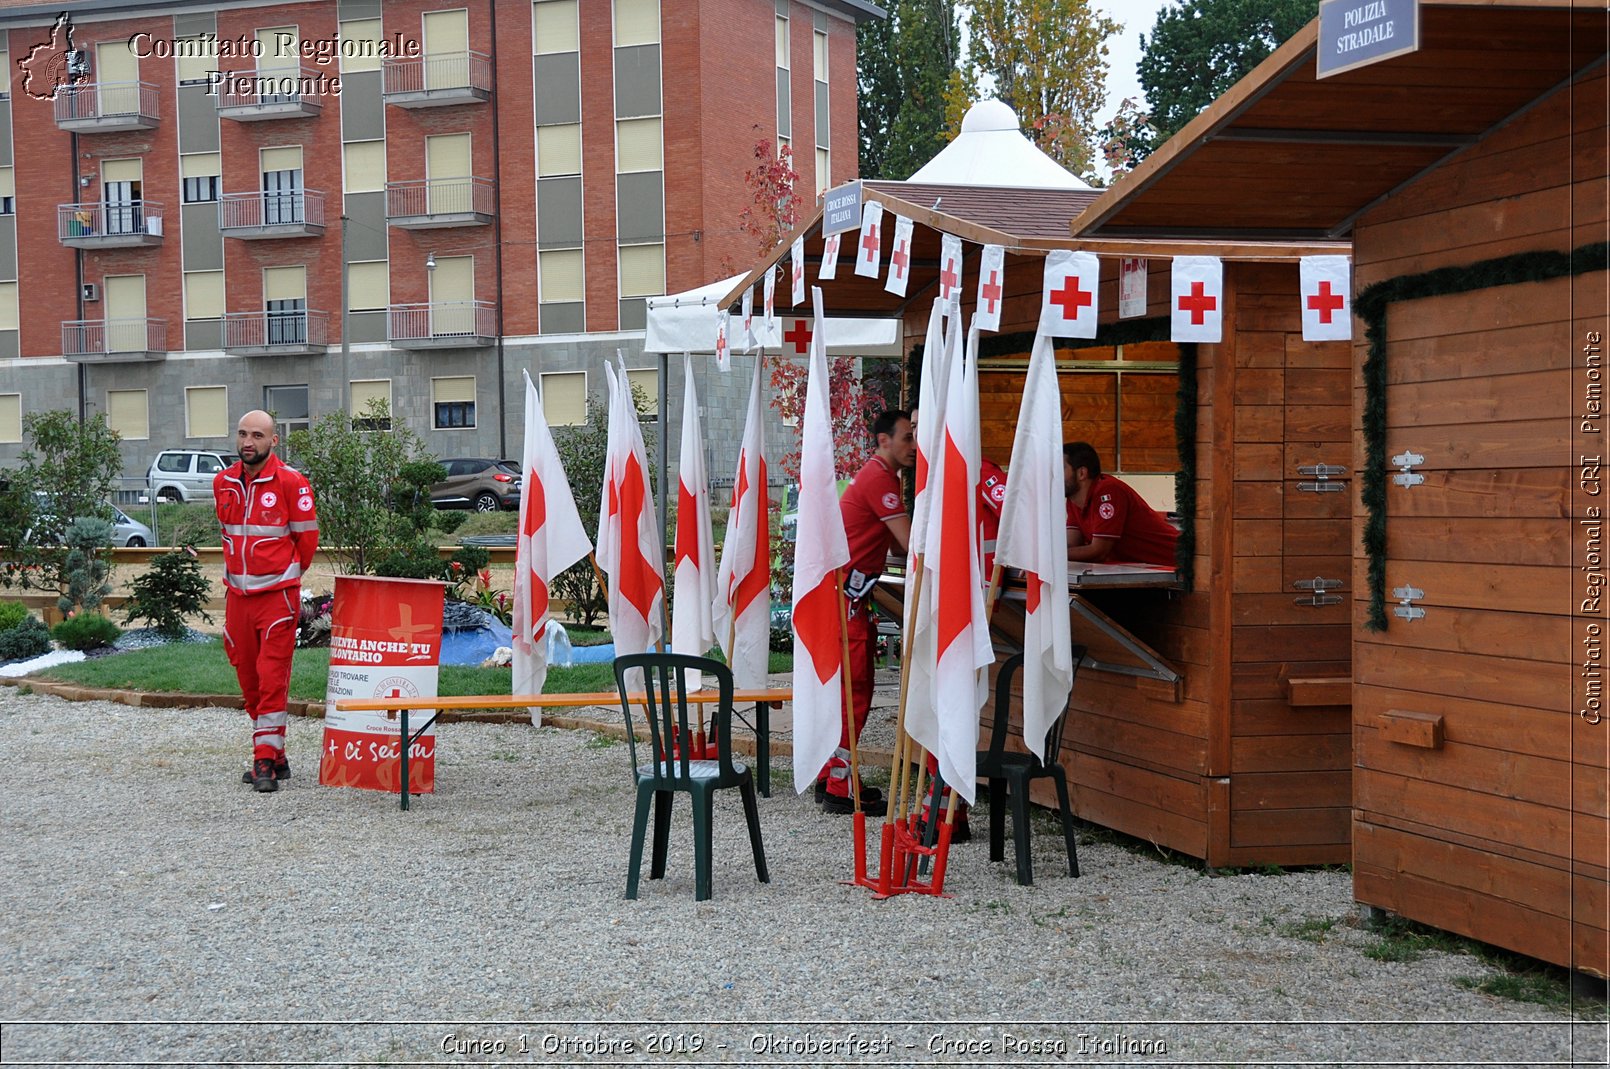 Cuneo 1 Ottobre 2019 - Oktoberfest - Croce Rossa Italiana